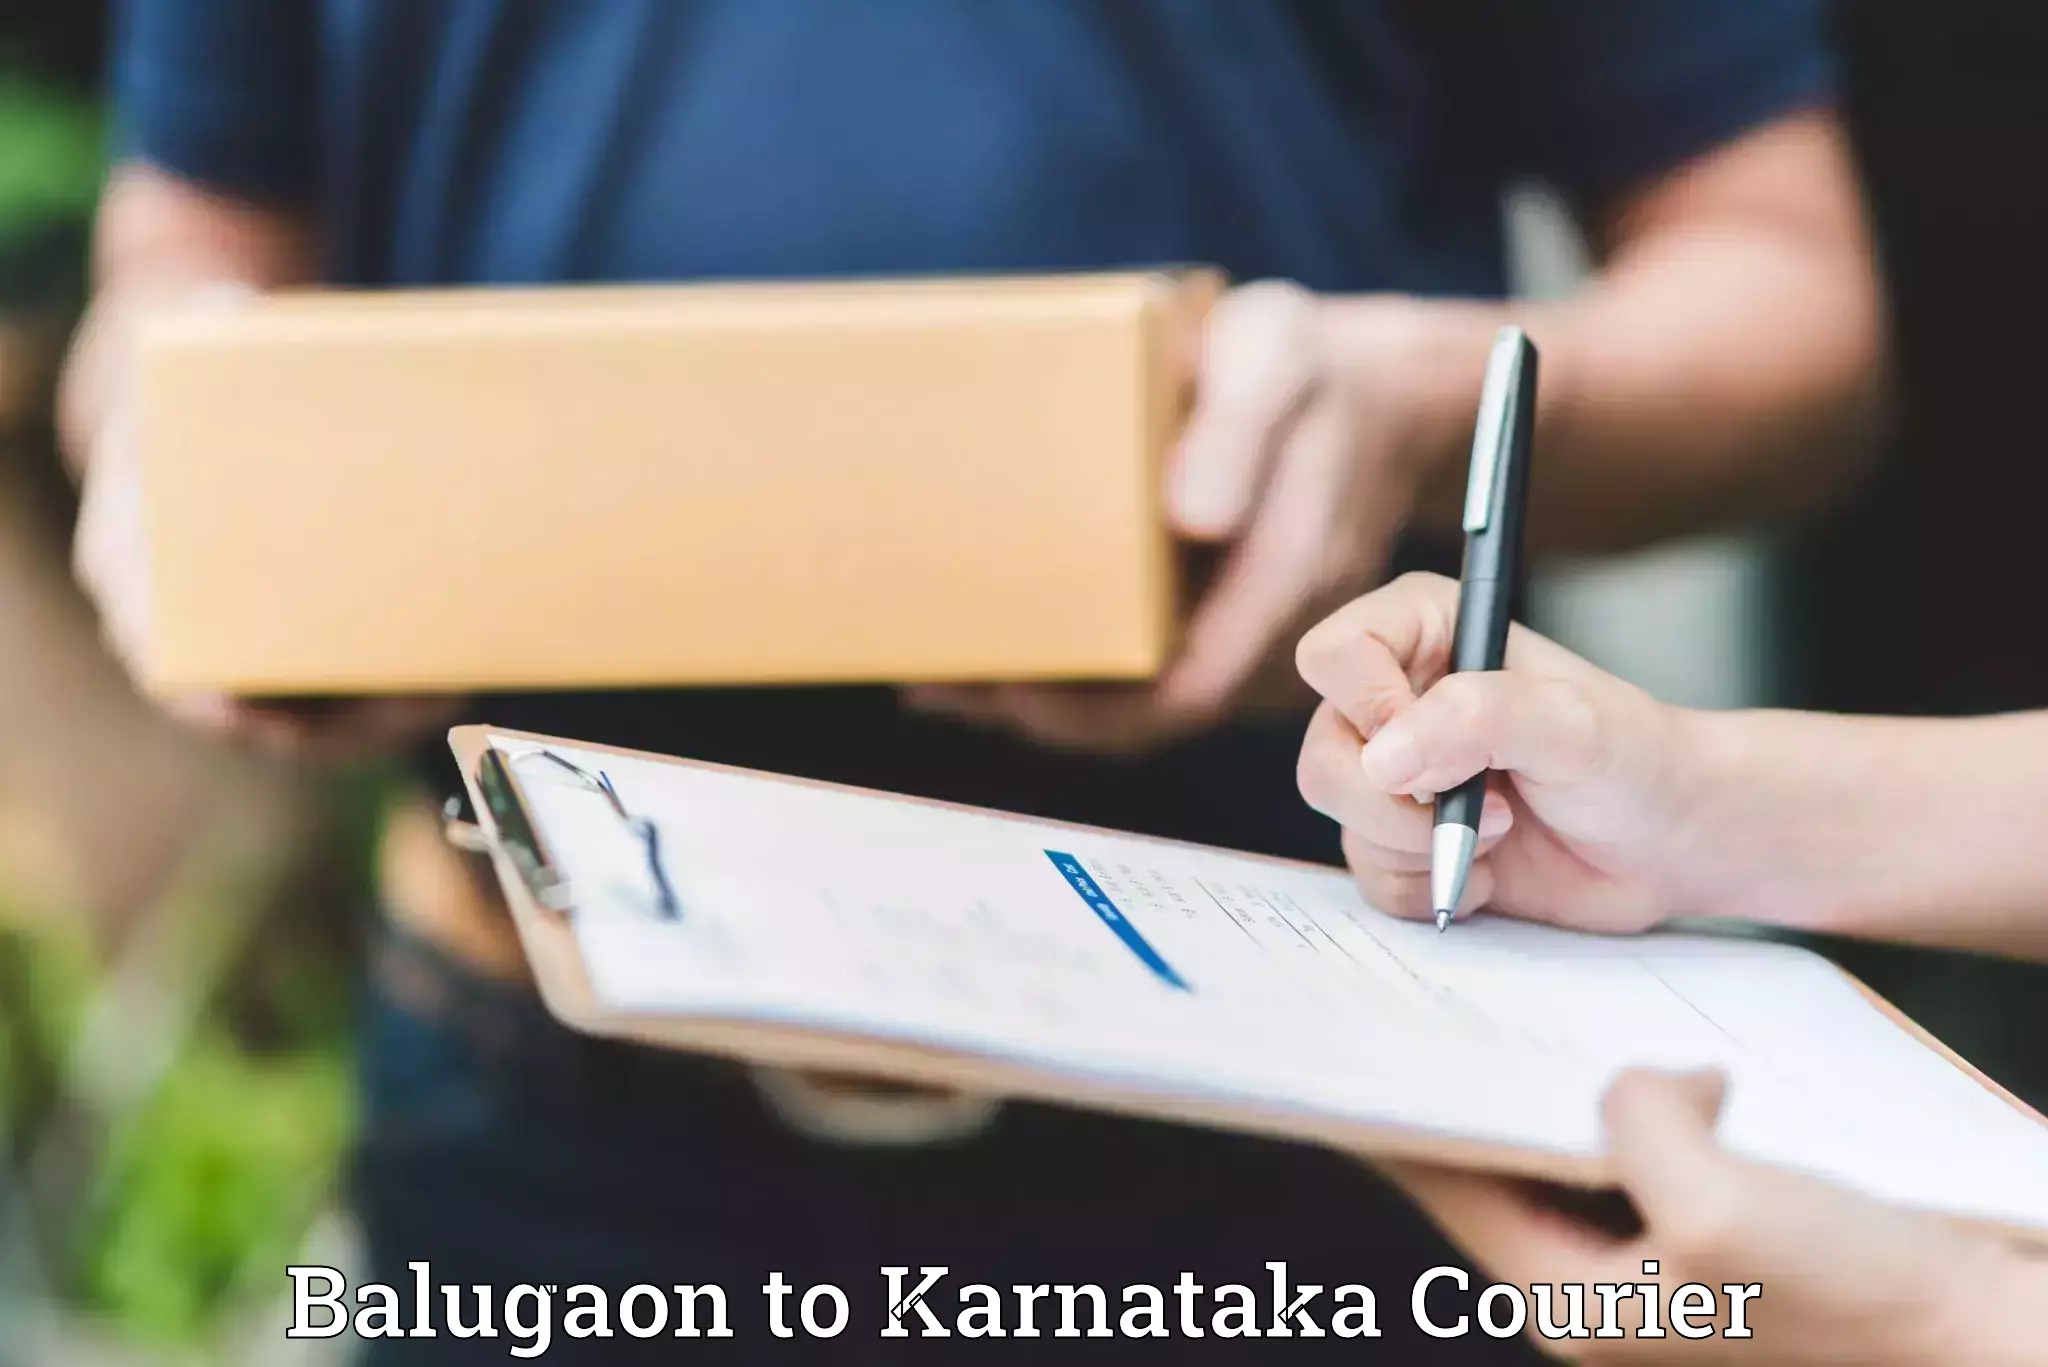 Home shifting experts Balugaon to Karnataka